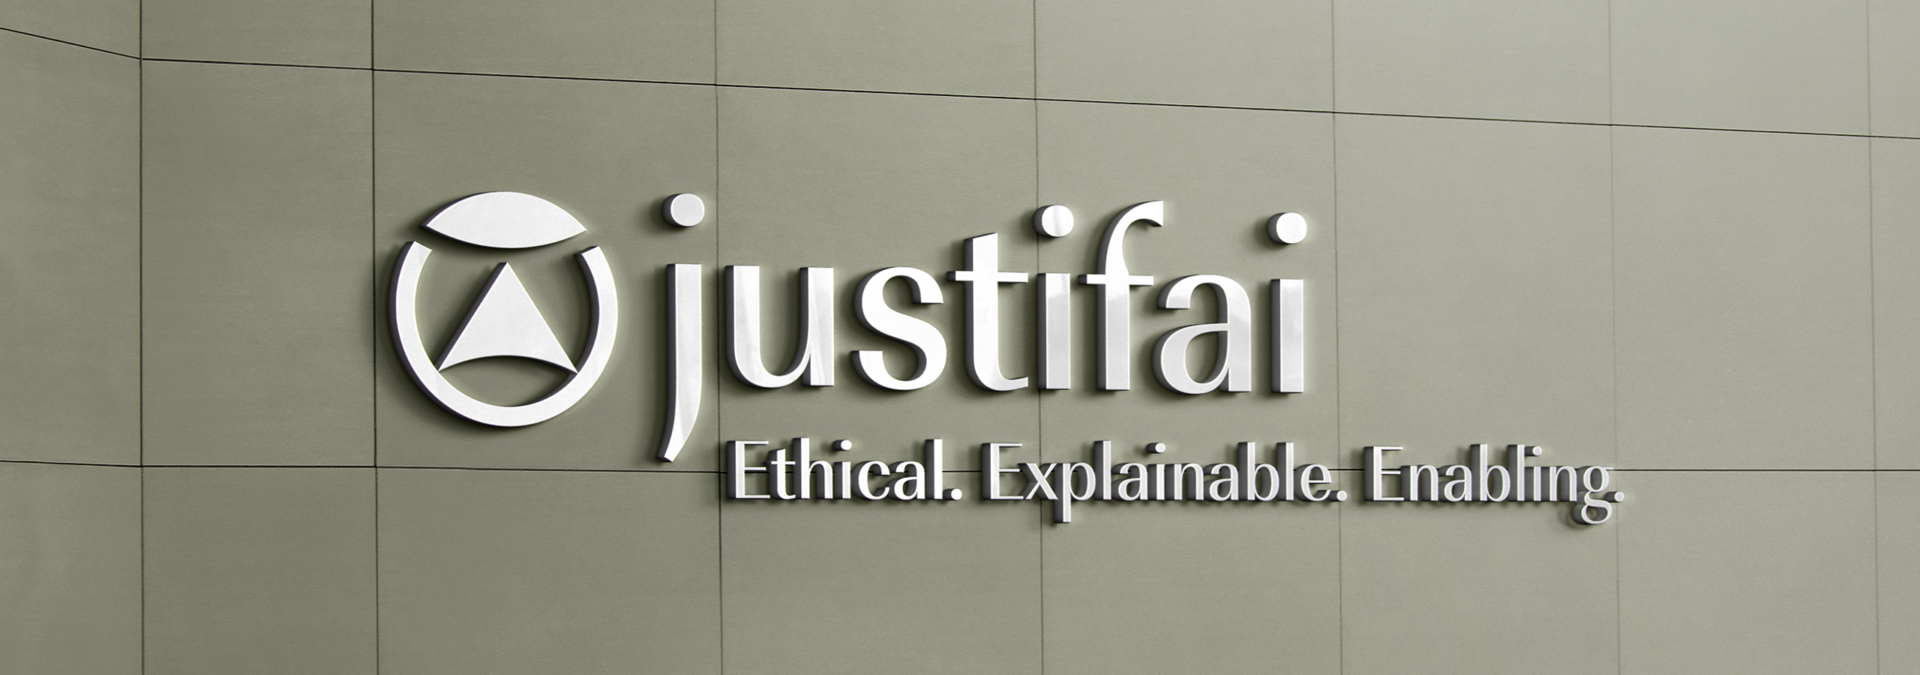 A visual identity for Ethical AI platform Justifai